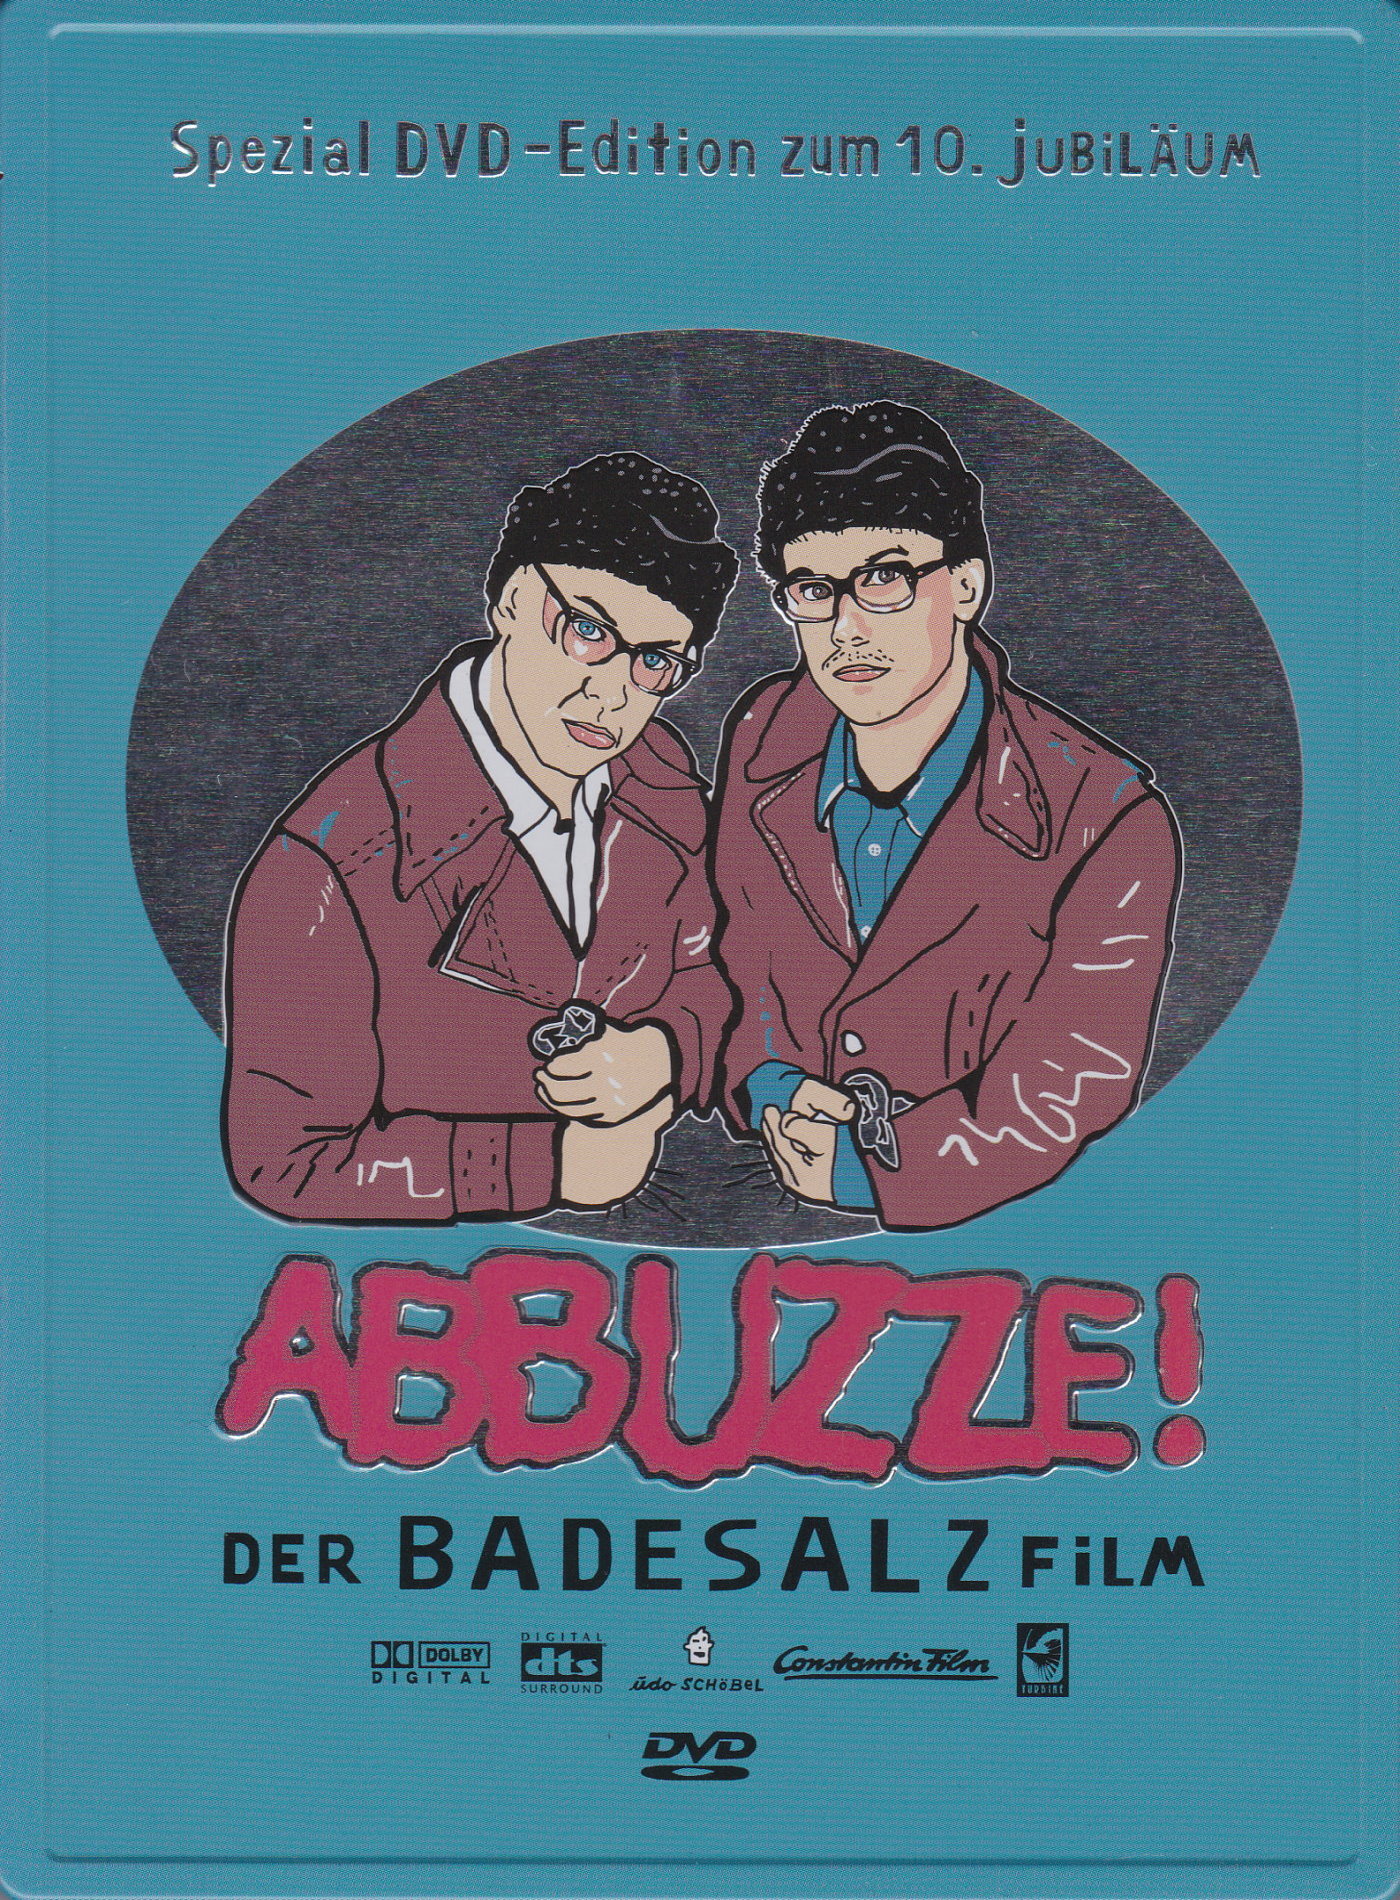 Cover - Abbuzze! Der Badesalz-Film.jpg